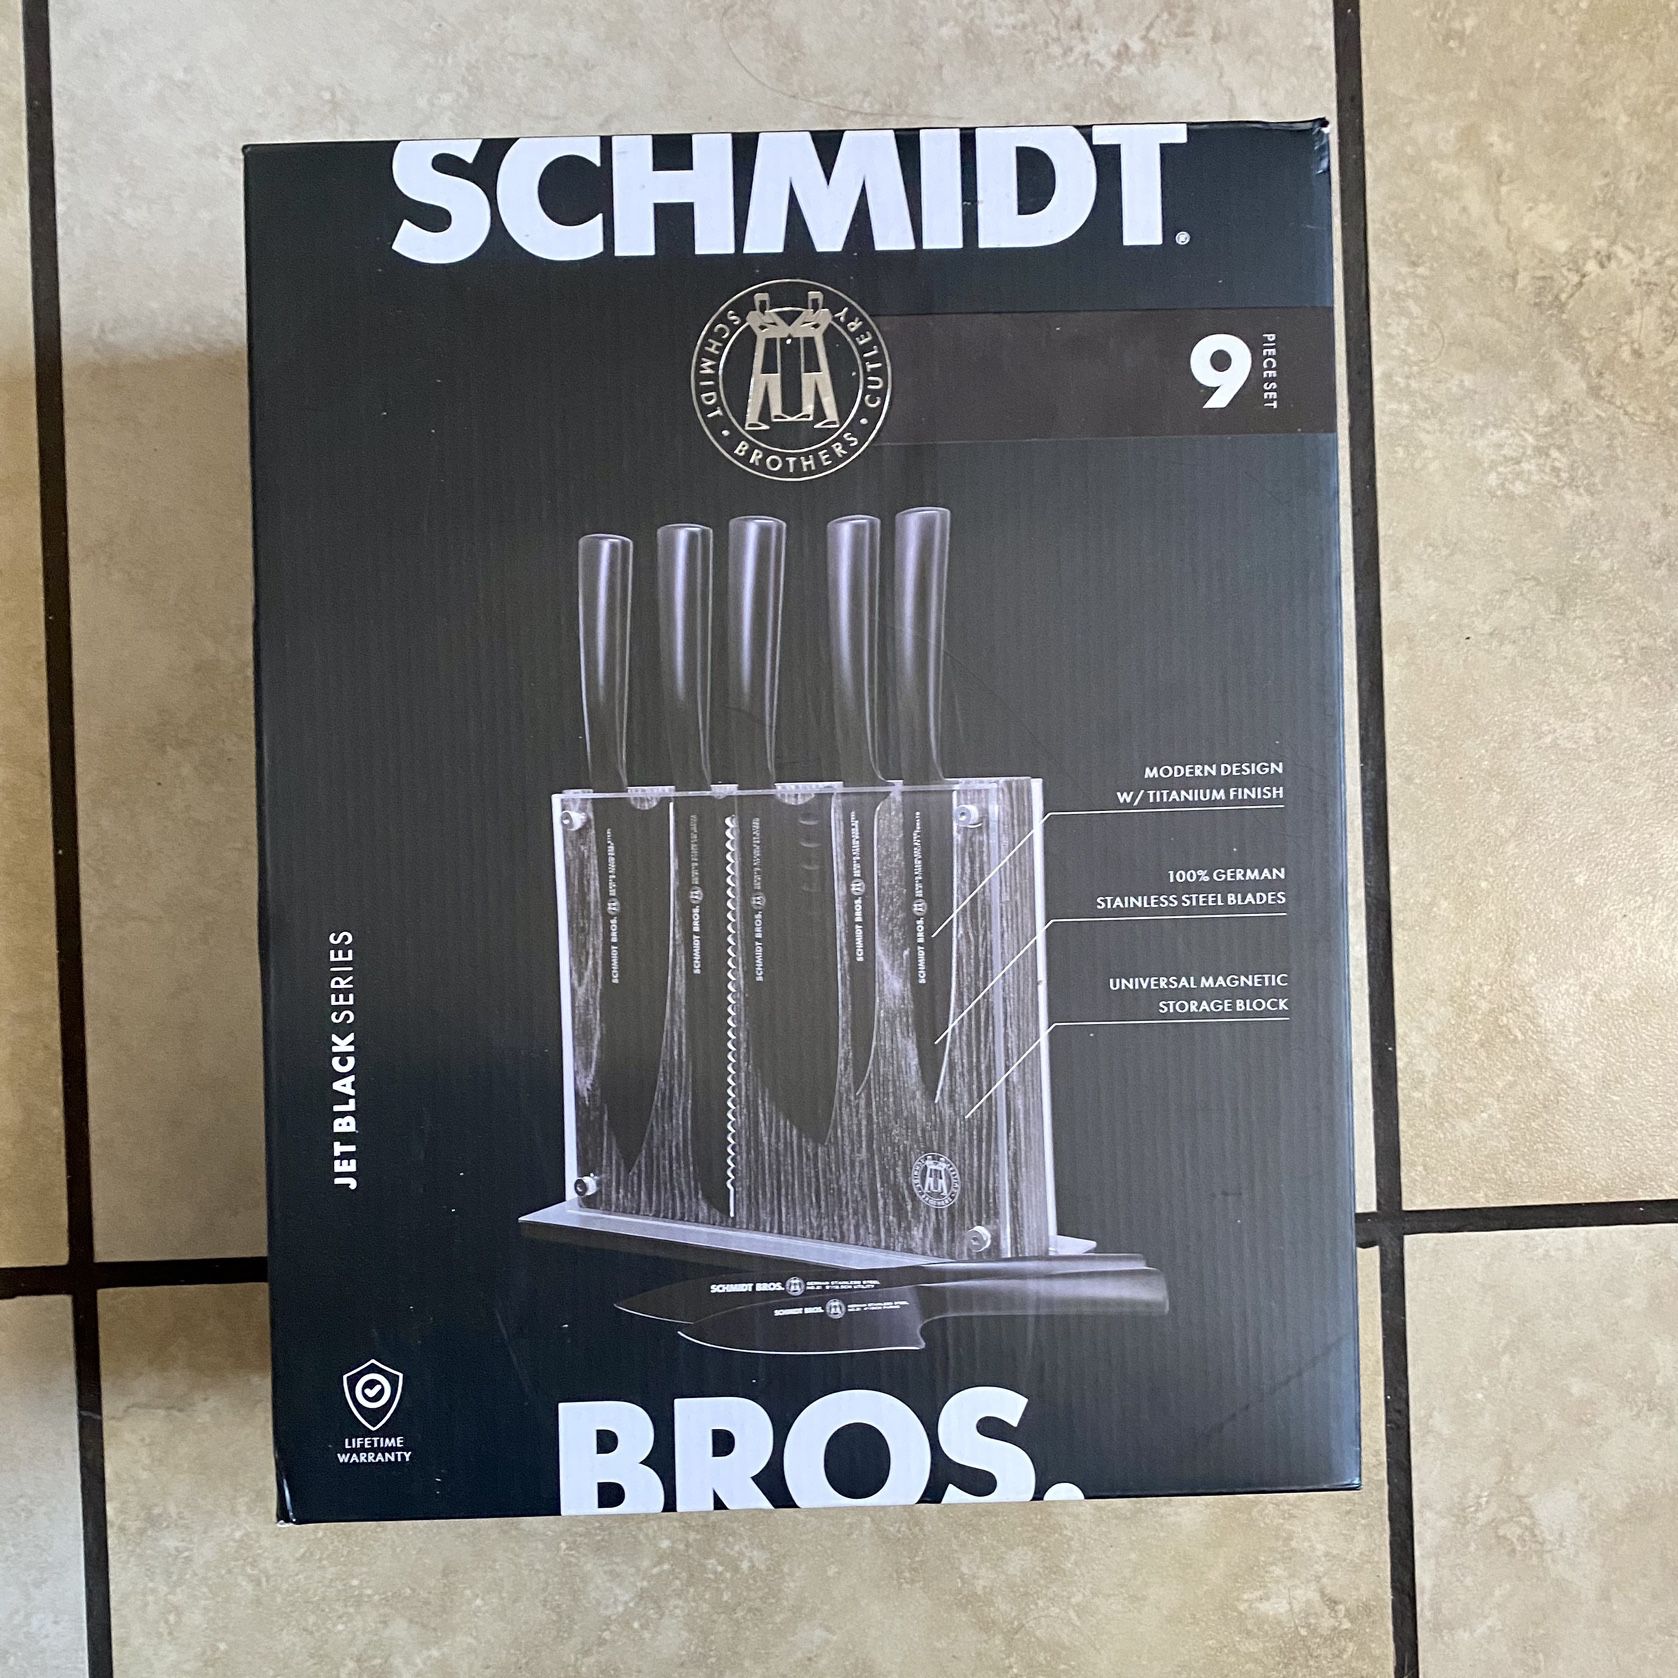 Schmidt Brothers Jet Black, 7-Piece Knife Block Set